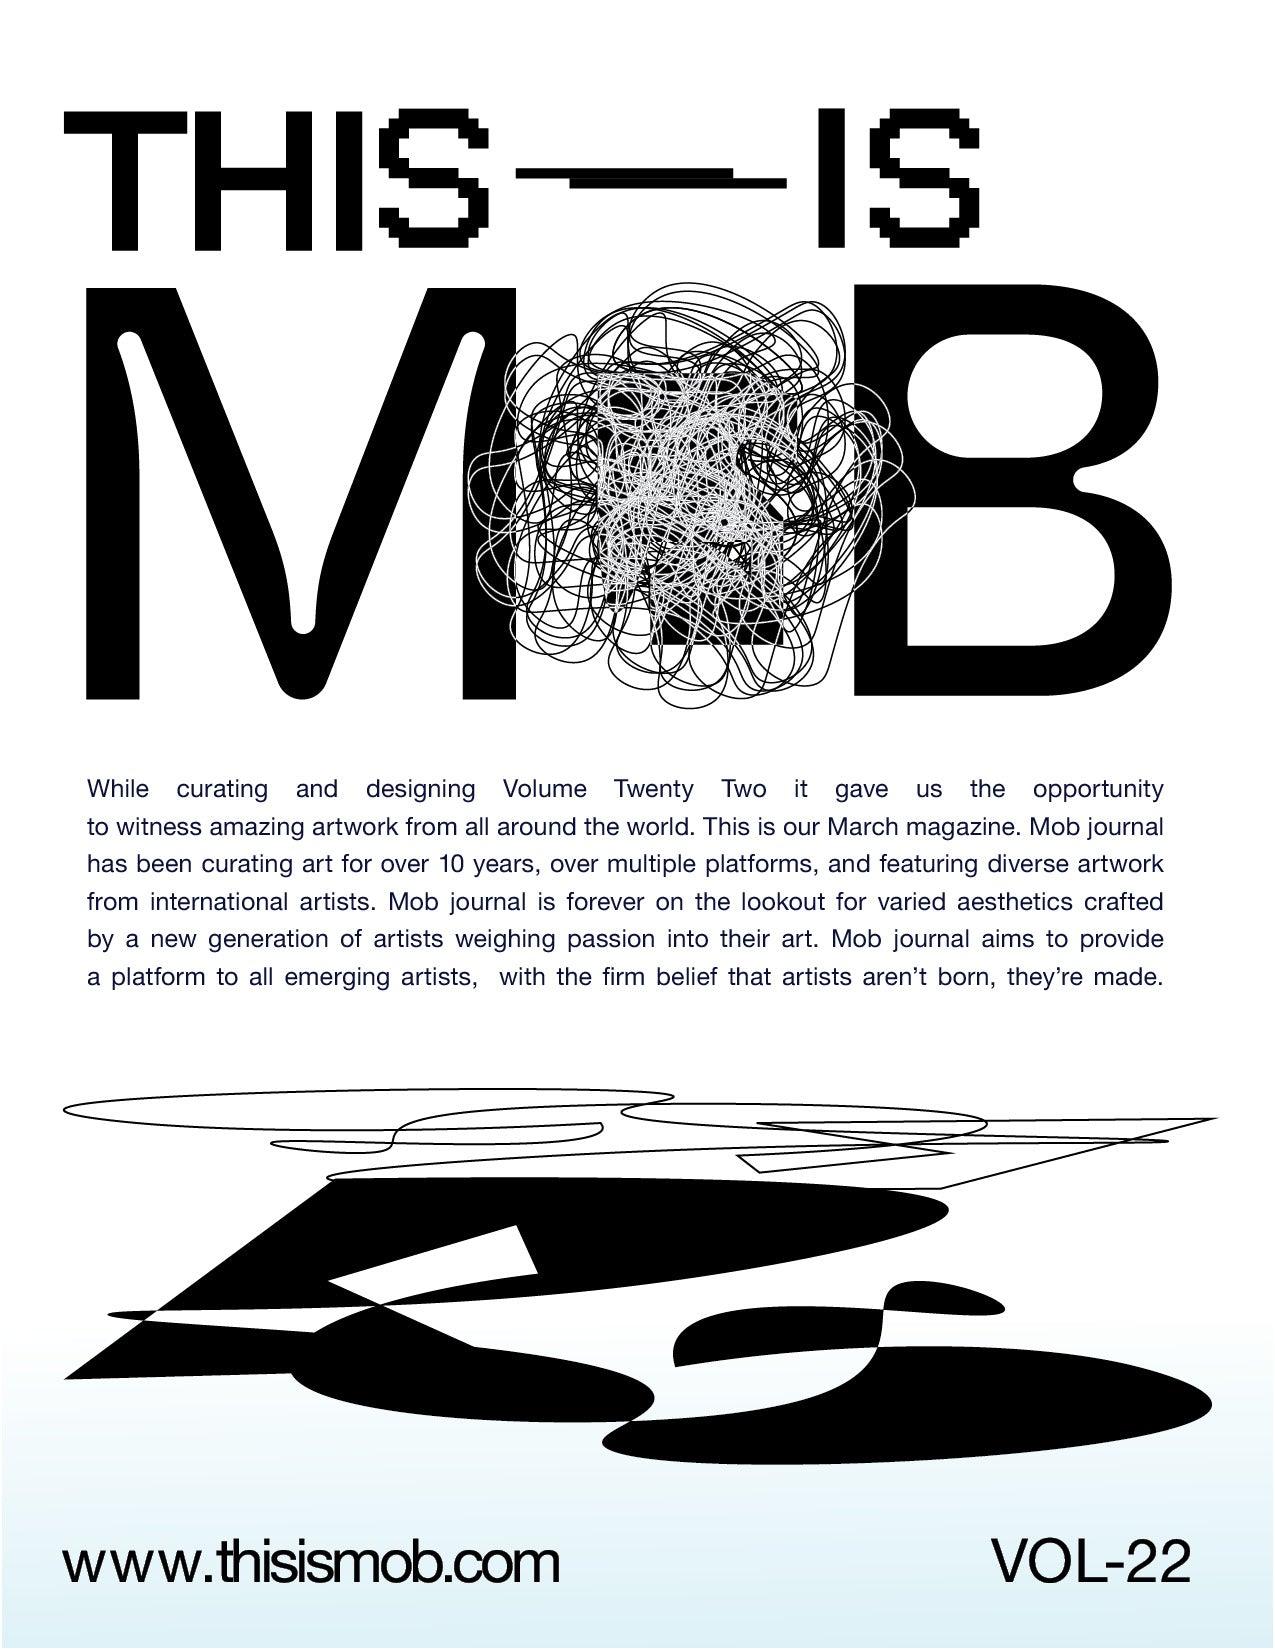 MOB JOURNAL | VOLUME TWENTY TWO | ISSUE #23 - Mob Journal